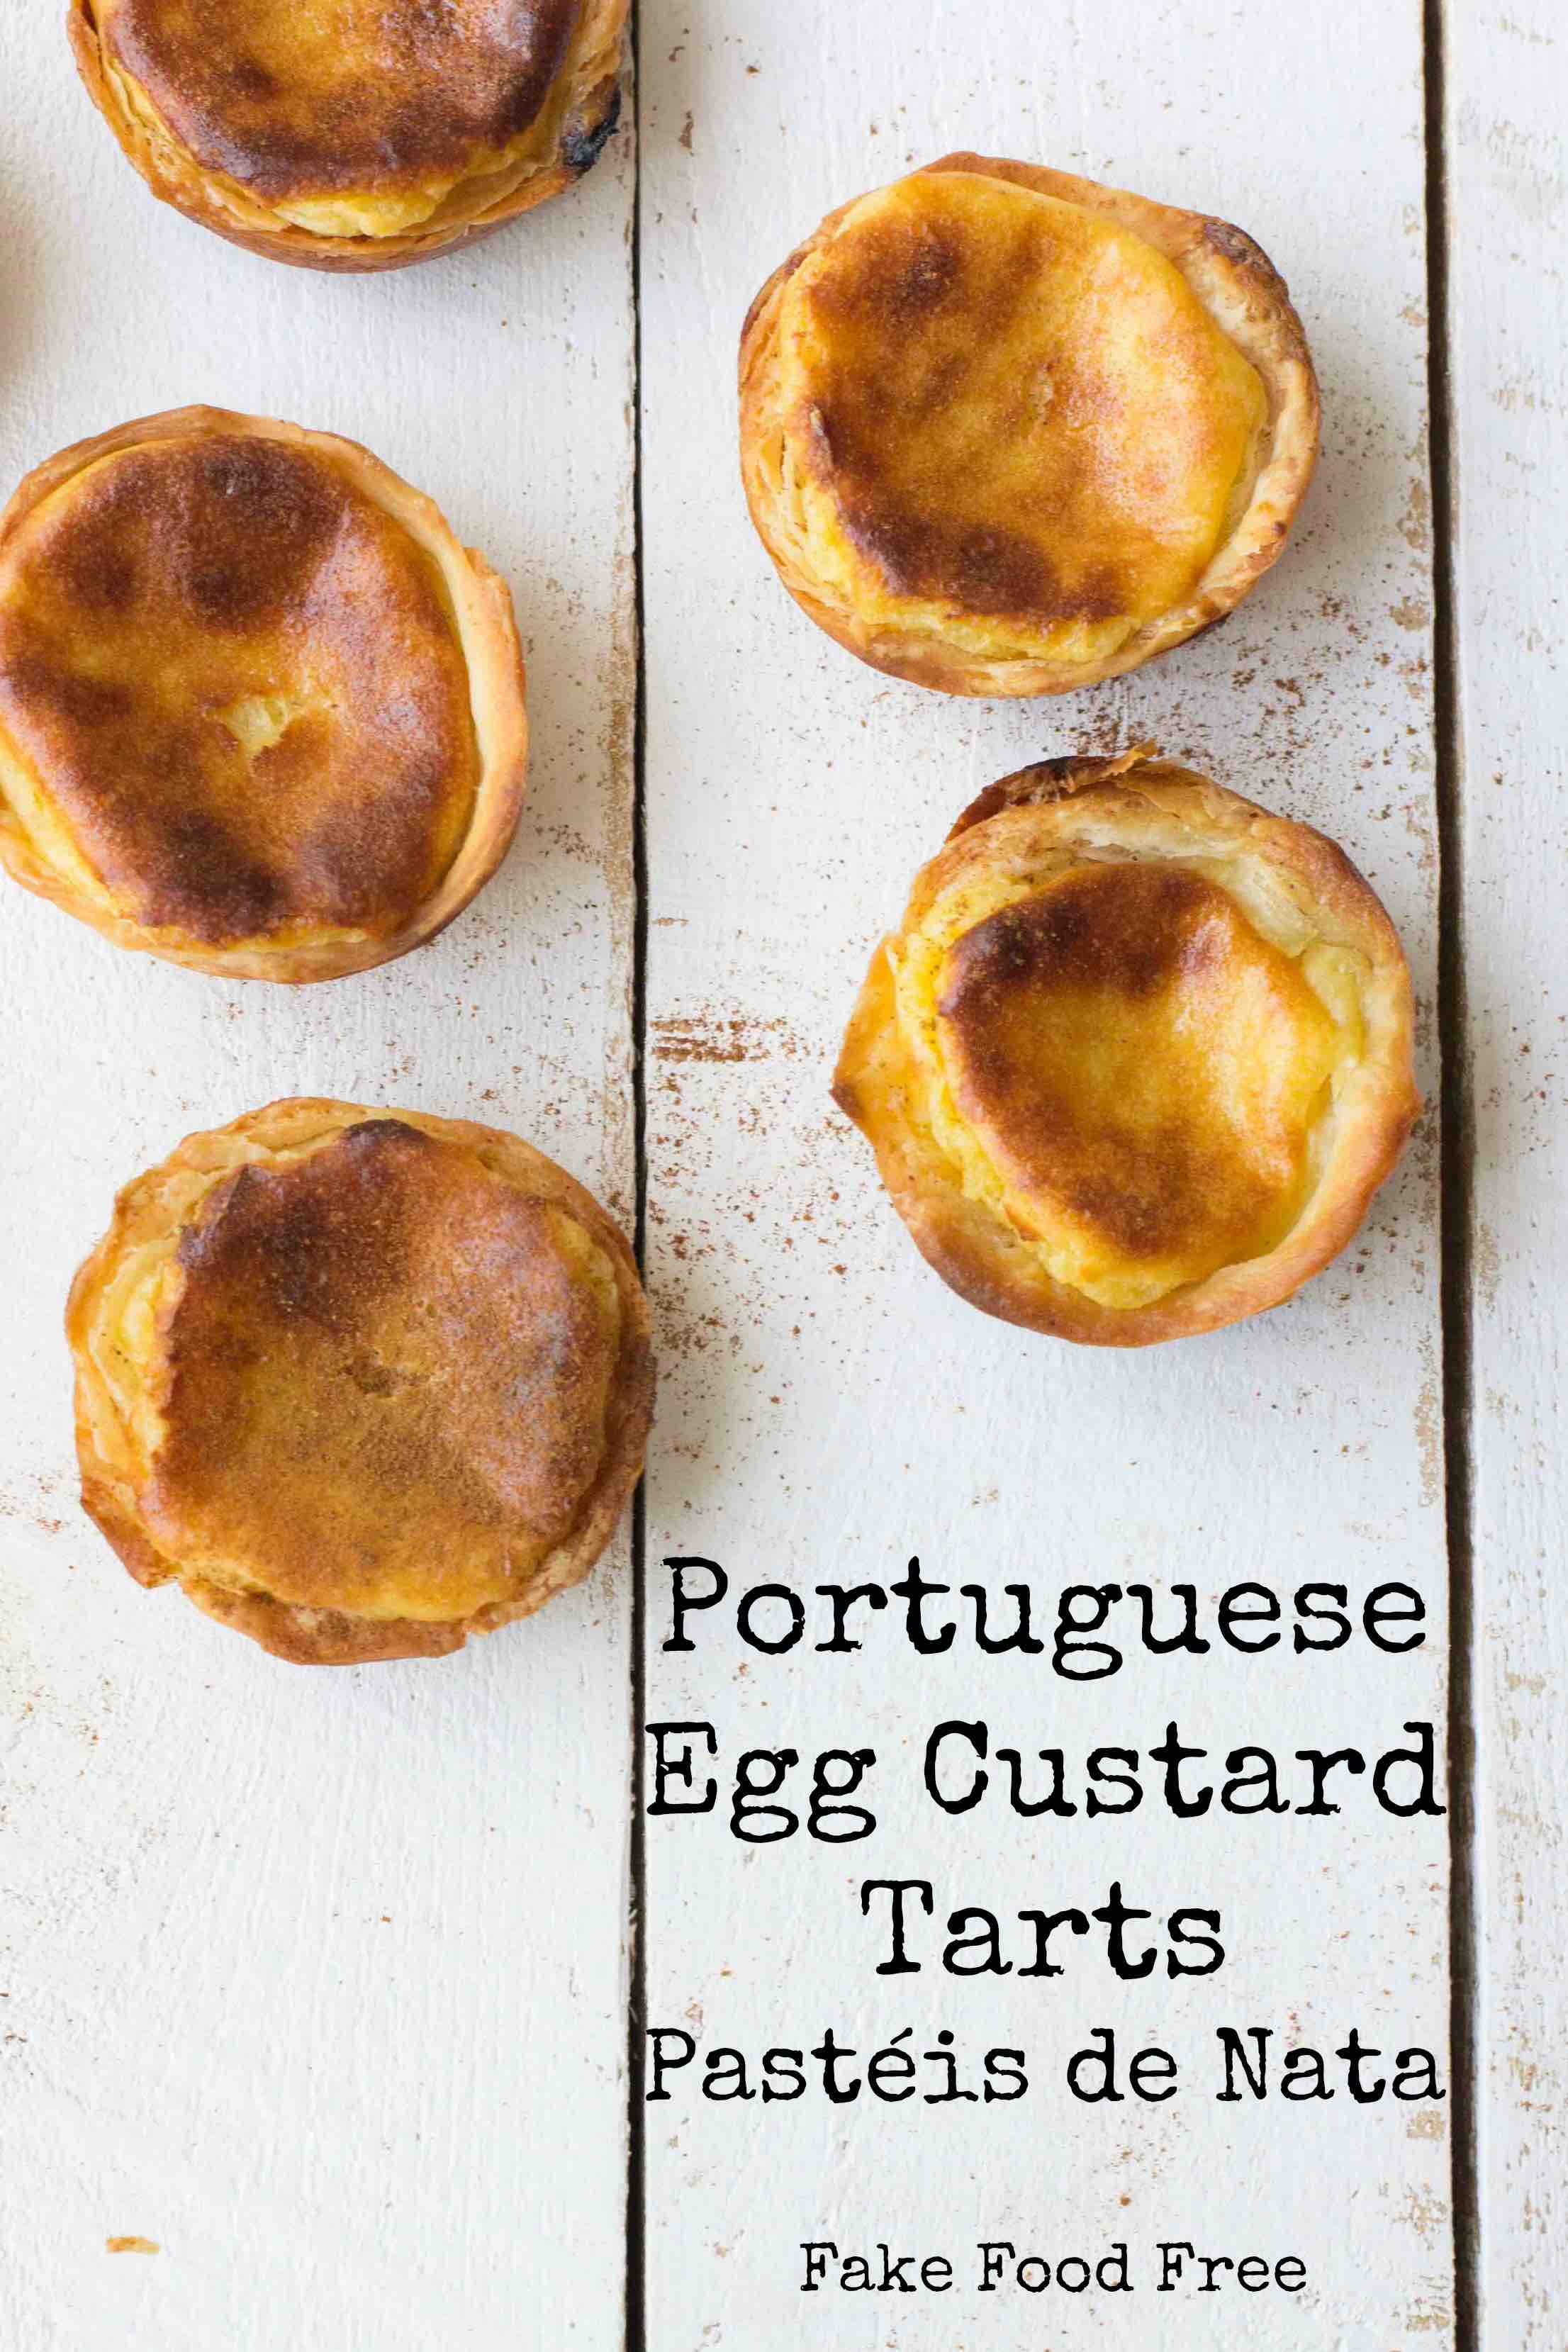 Crispy Egg Custard Tarts (Pastéis de Nata) from My Portugal by George ...